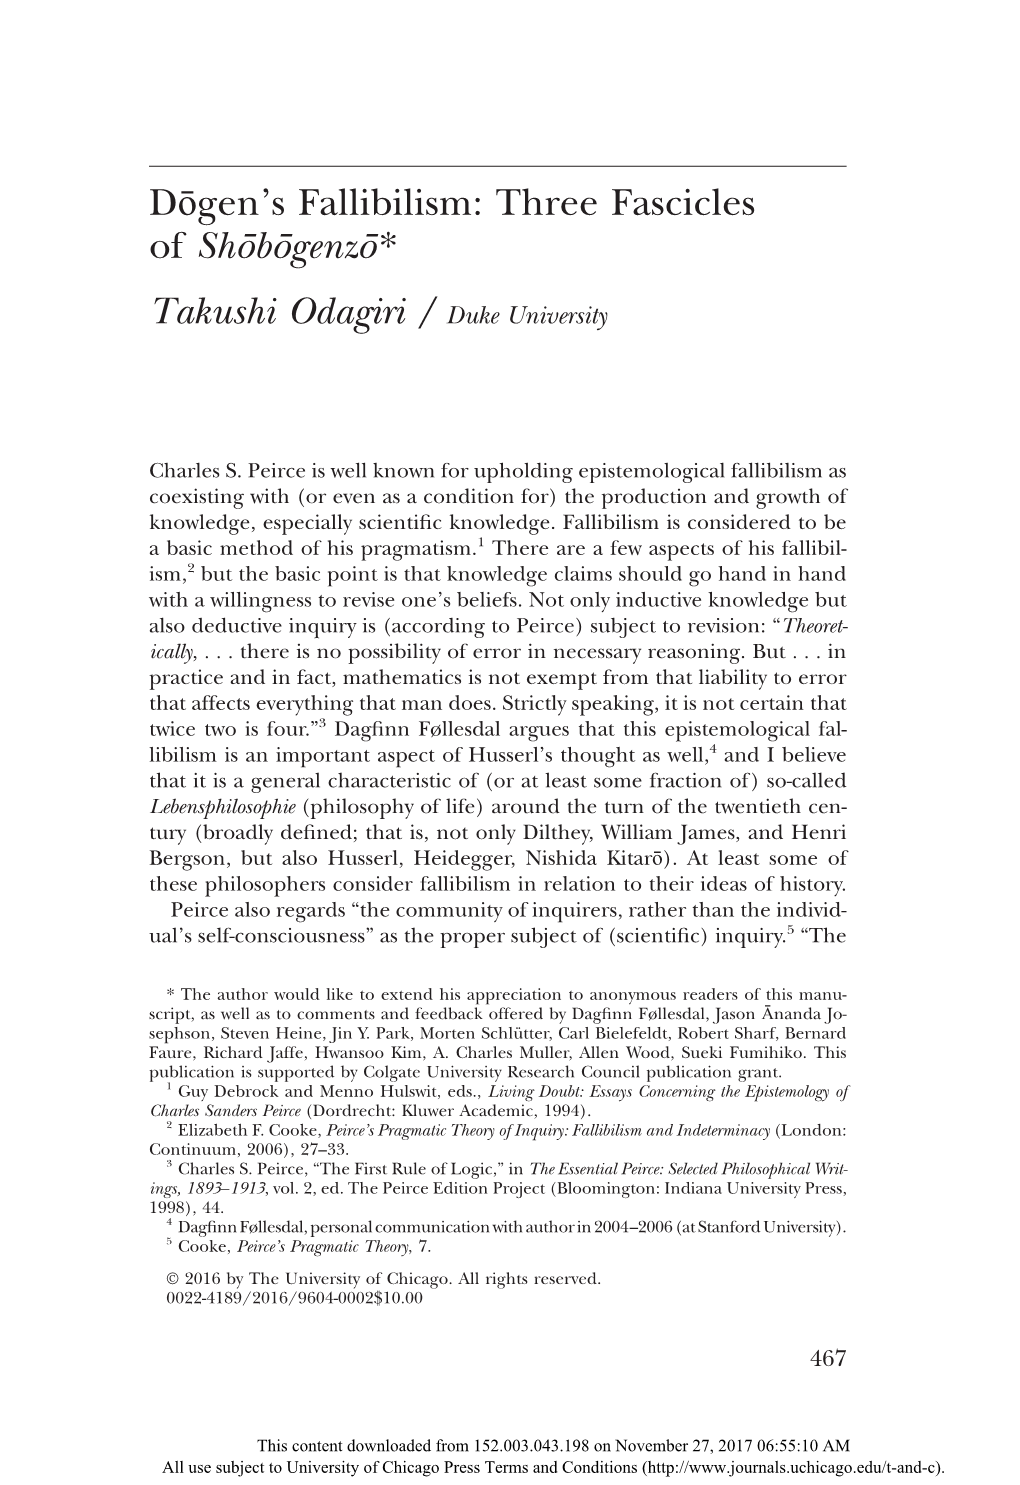 Dōgen's Fallibilism: Three Fascicles of Shōbōgenzō